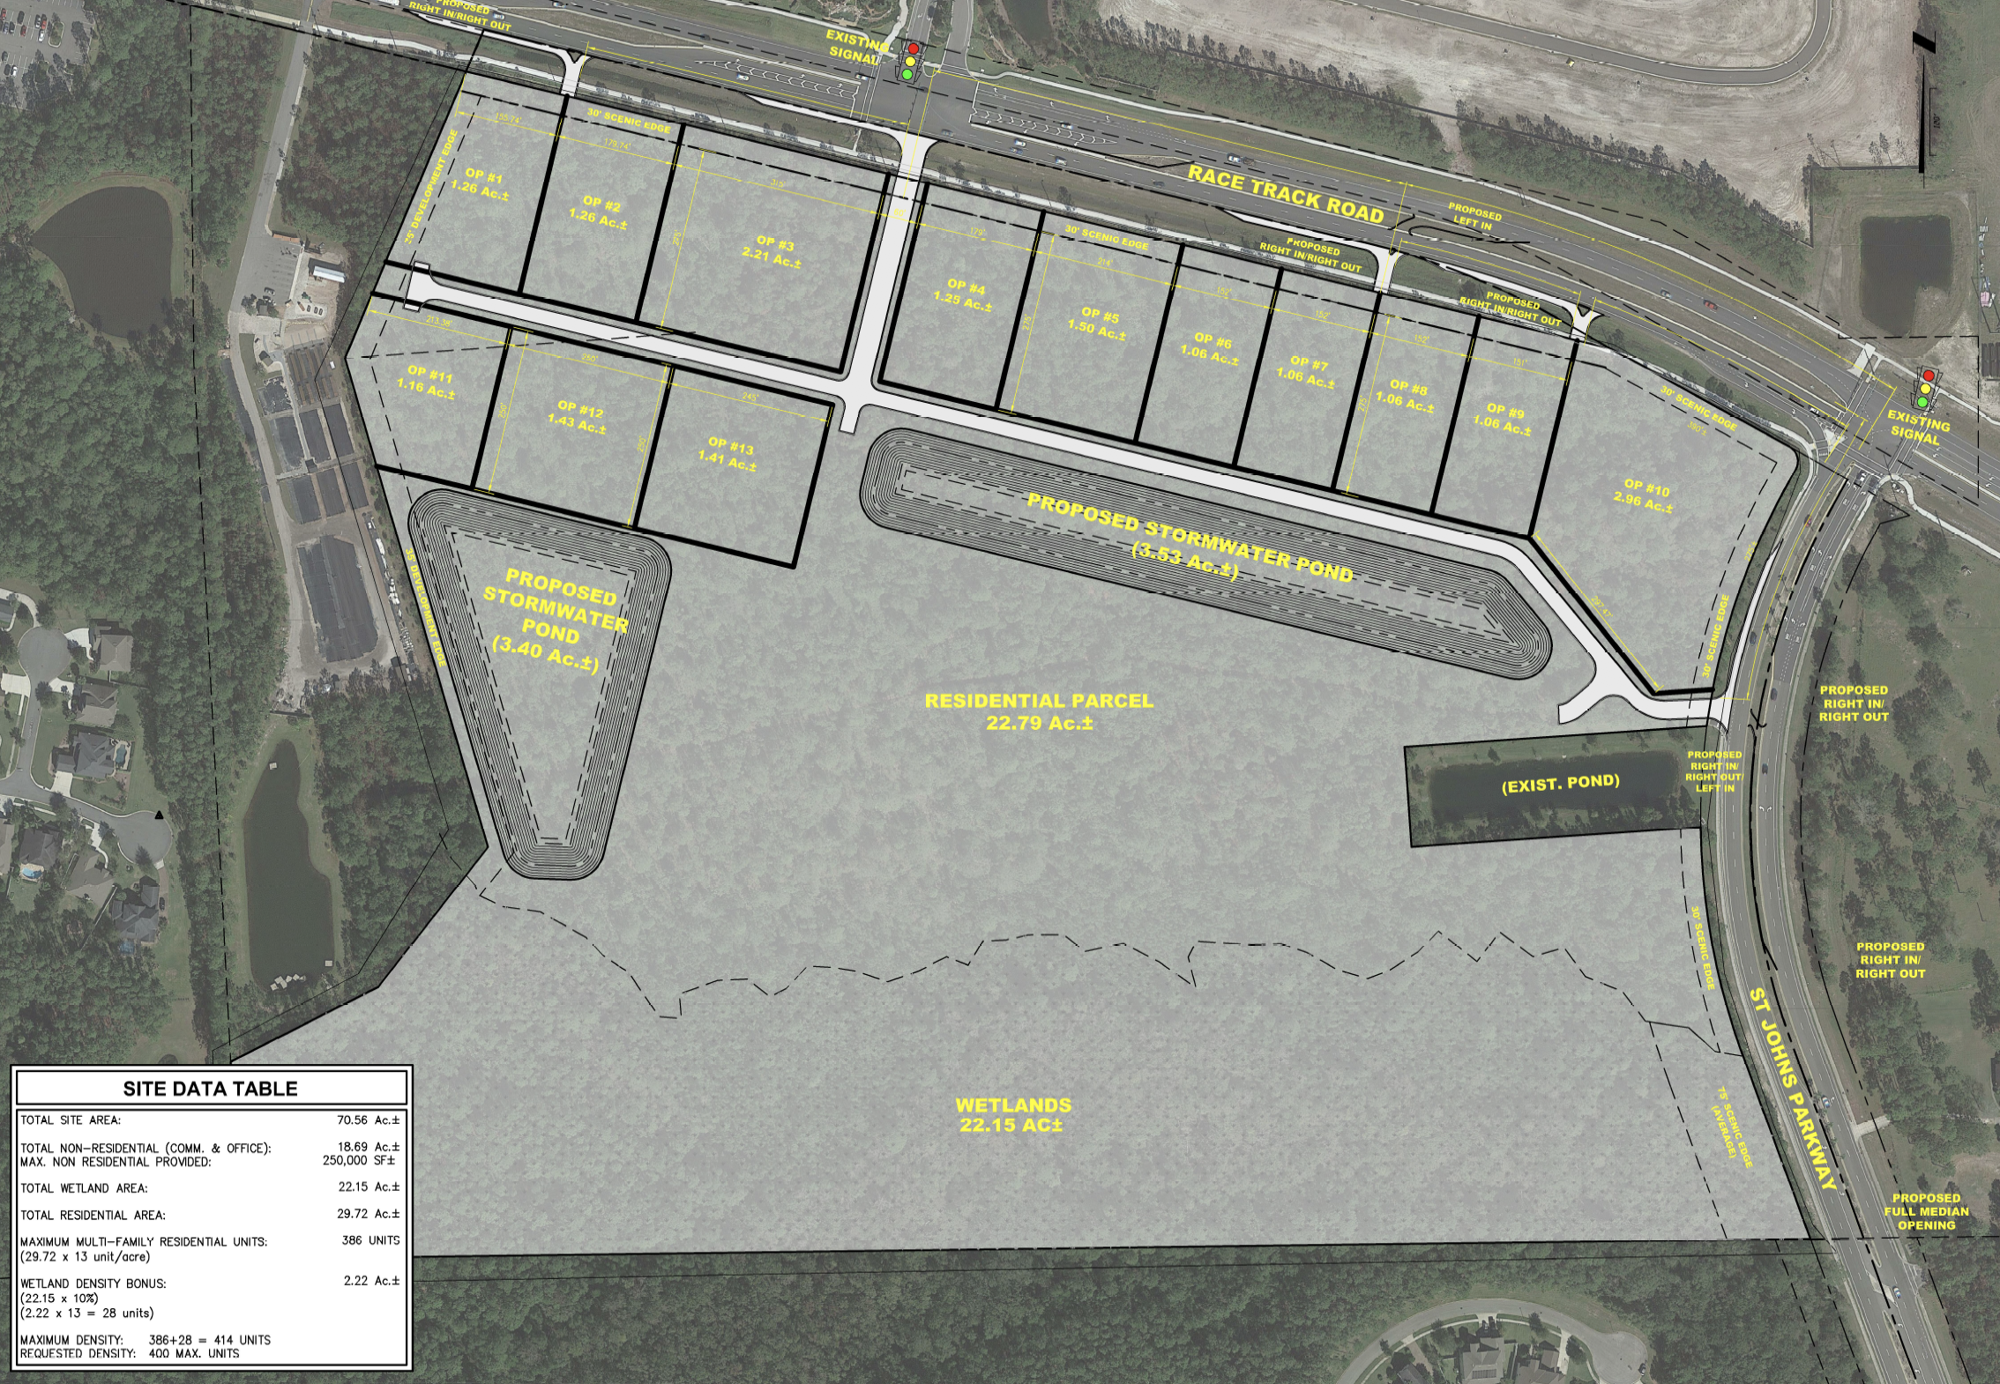 The site plan for Durbin Creek Crossing.